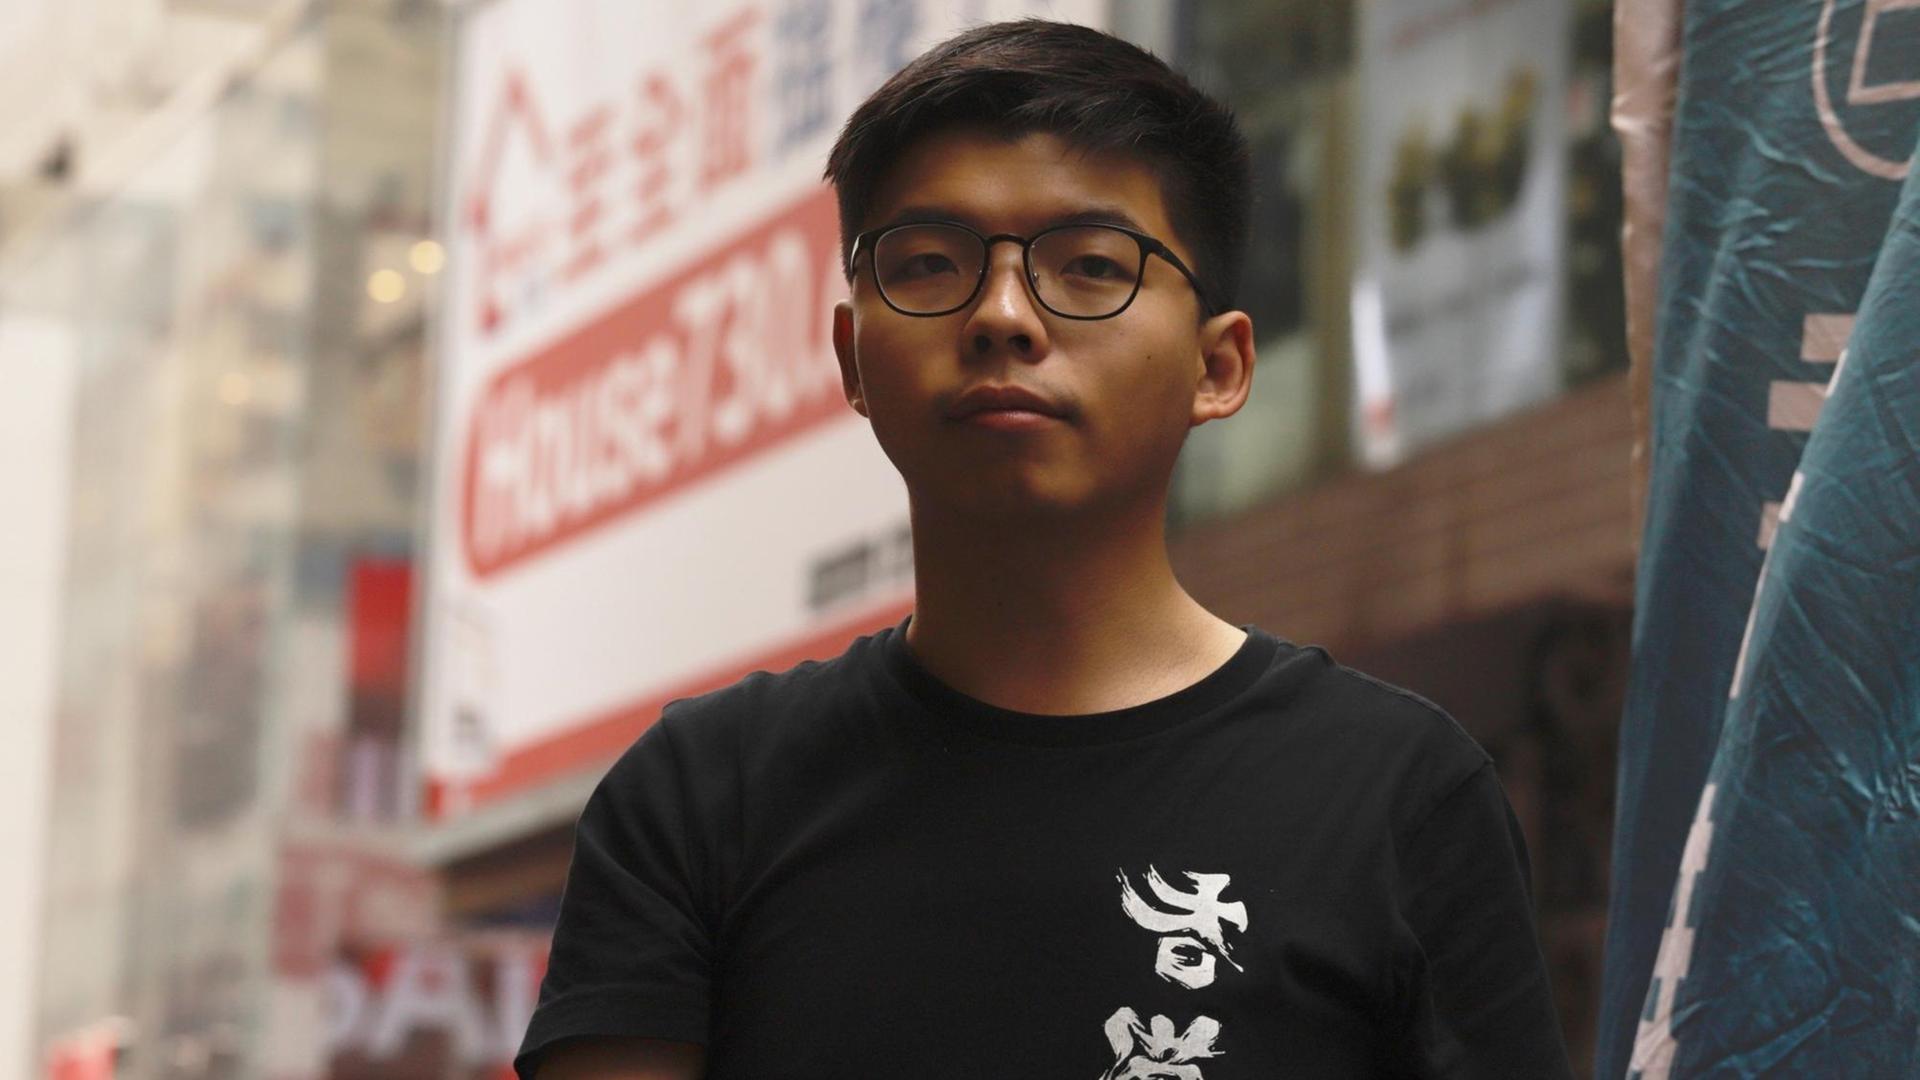 Unfree Speech by Joshua Wong